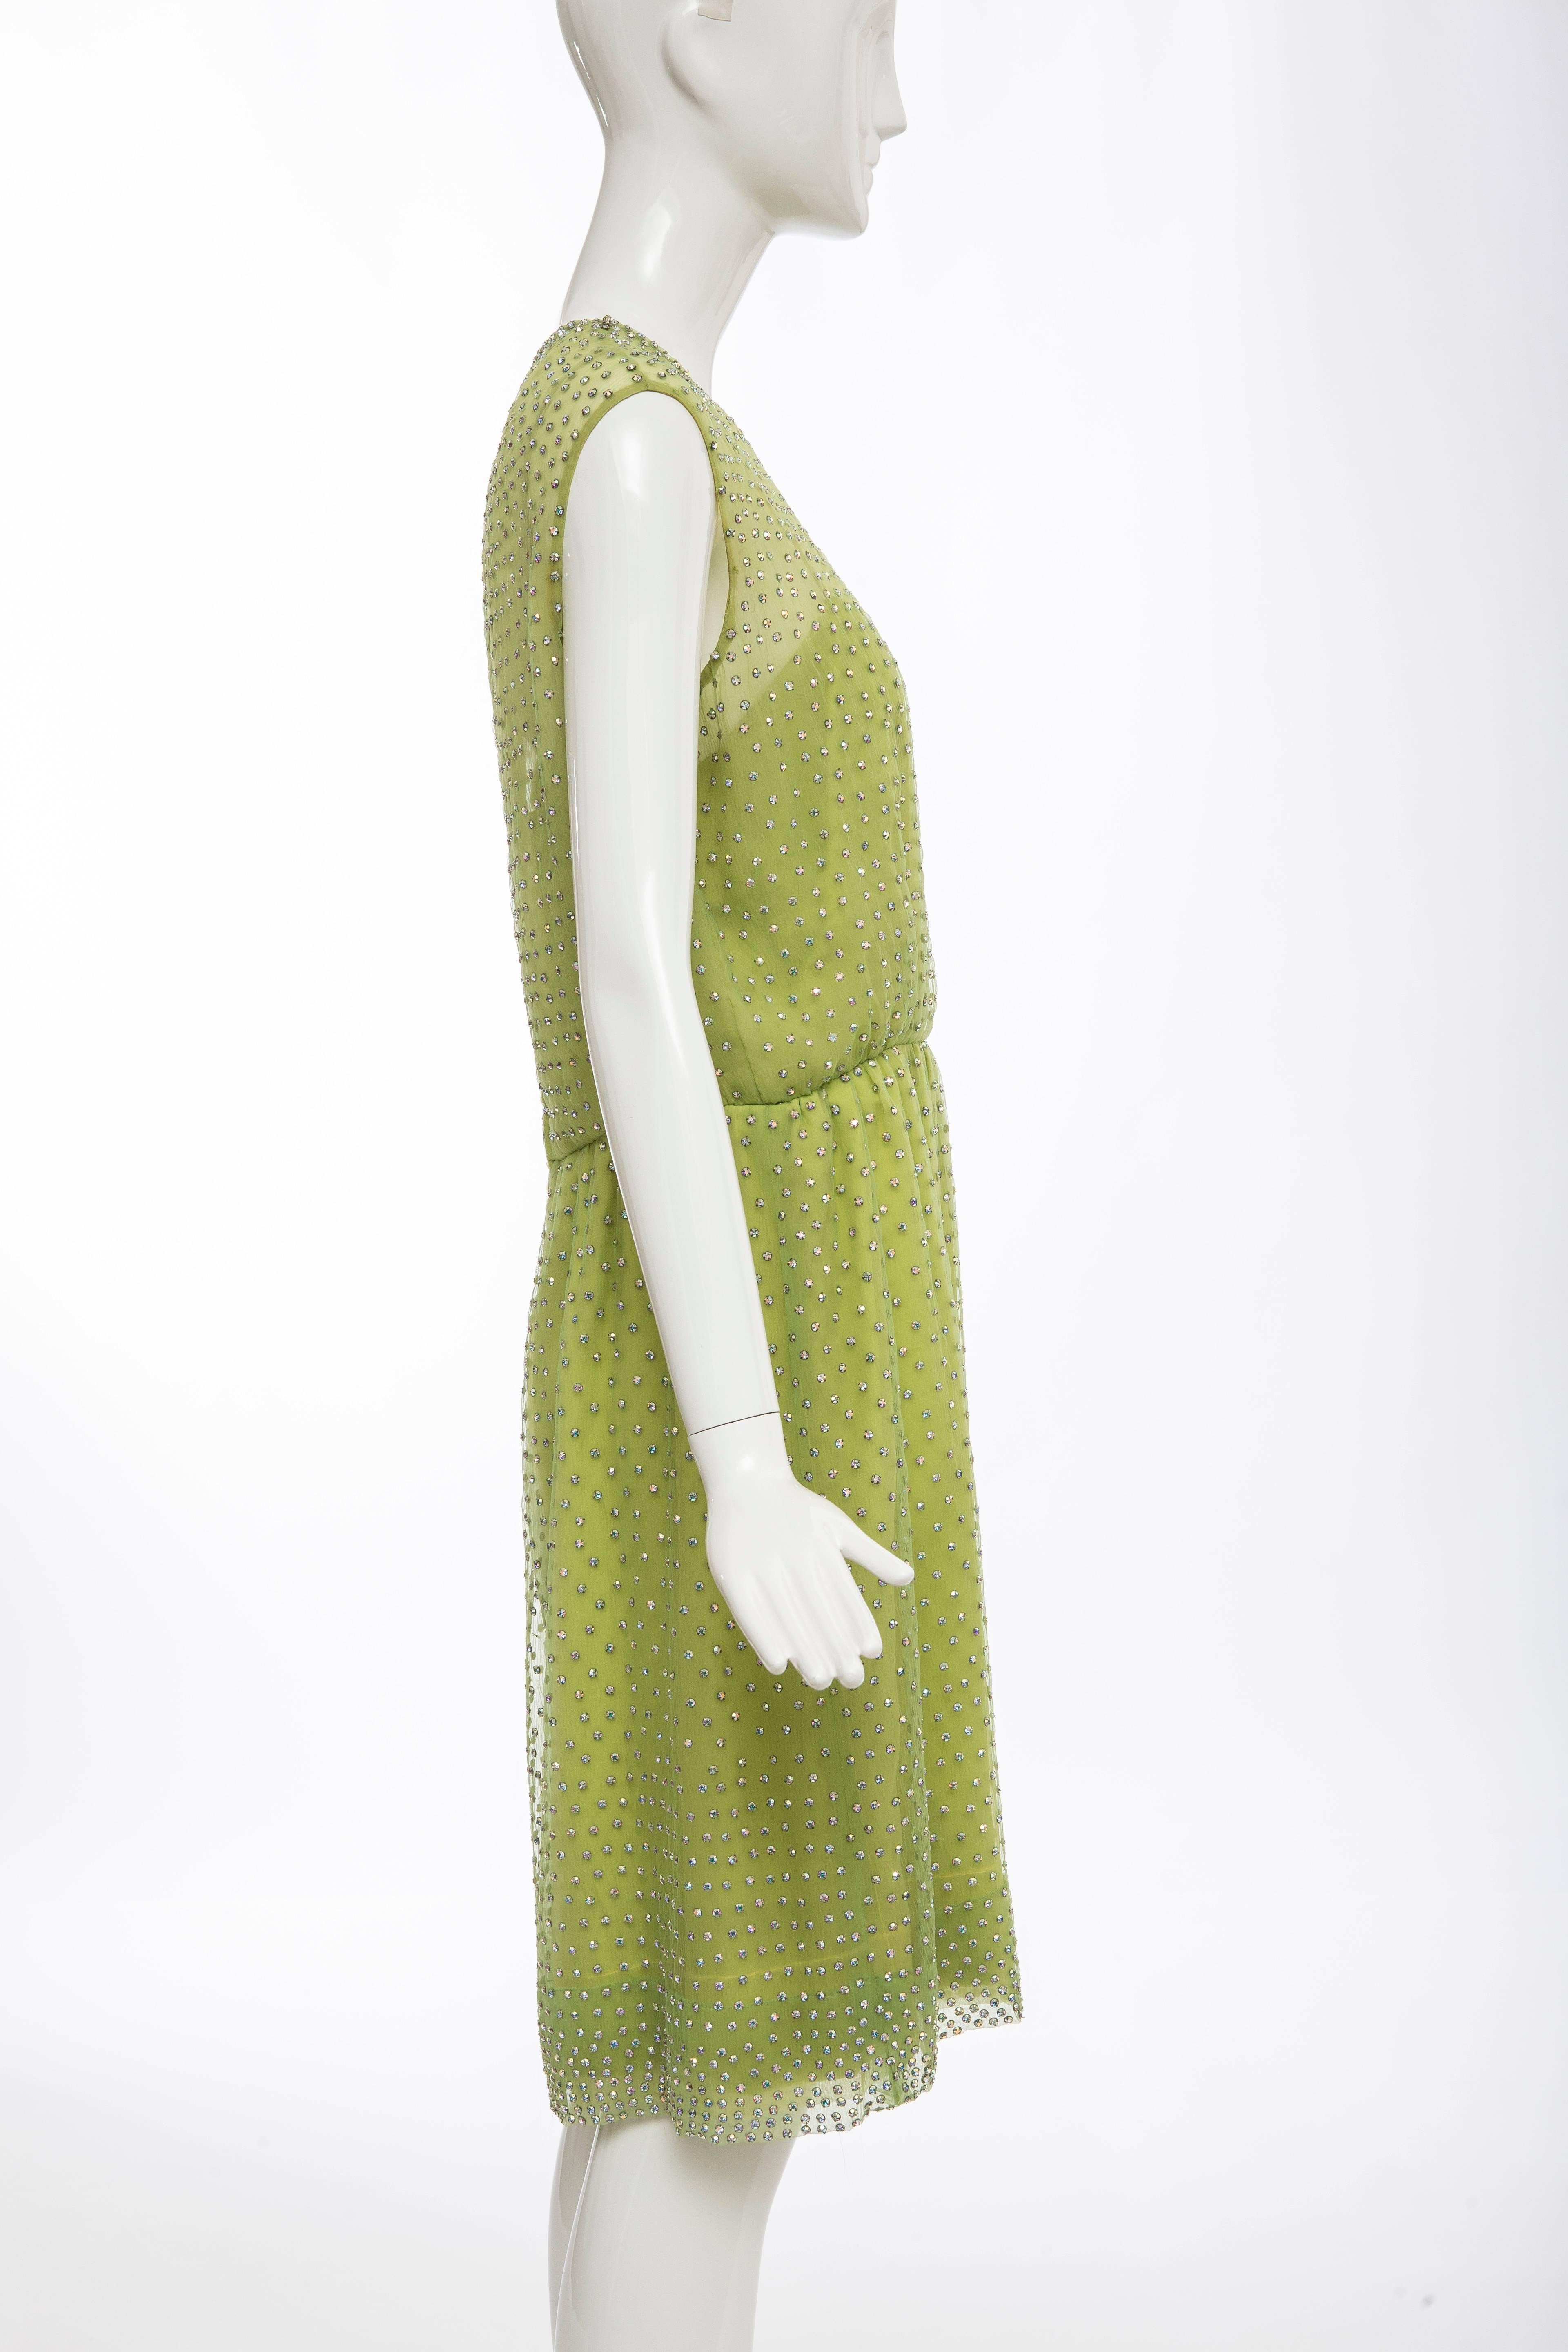 Green Harvey Berin designed by Karen Stark Silk Dress Prong Set Crystals, Circa 1960's For Sale